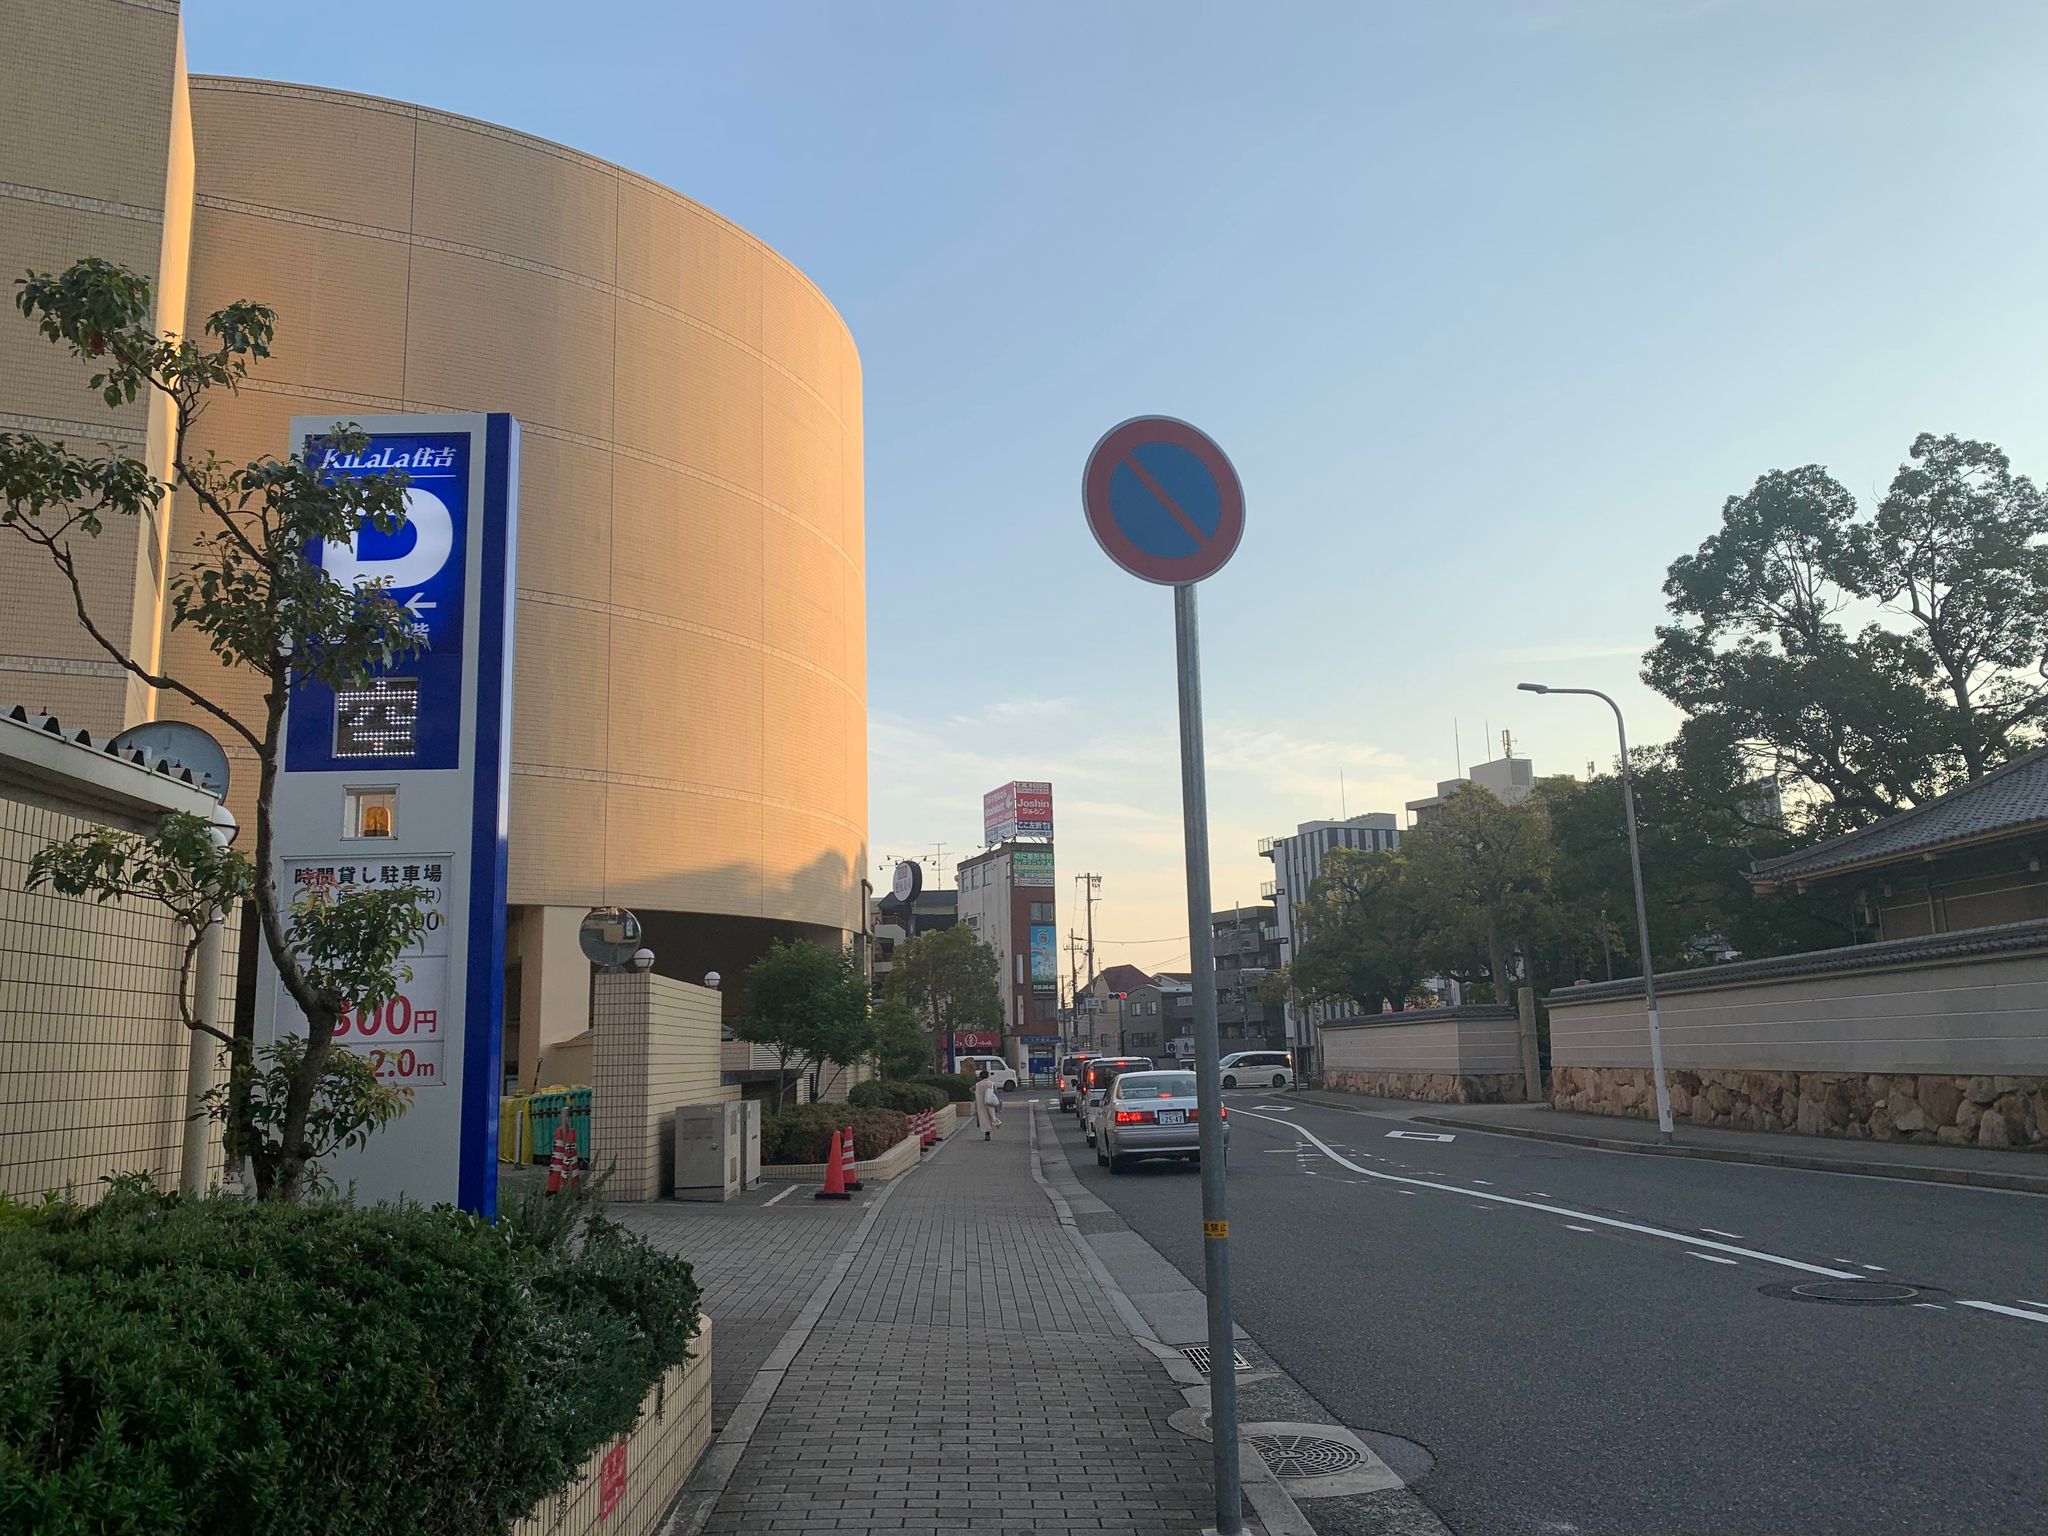 NAORU整体 神戸住吉院のアクセス経路説明文の写真